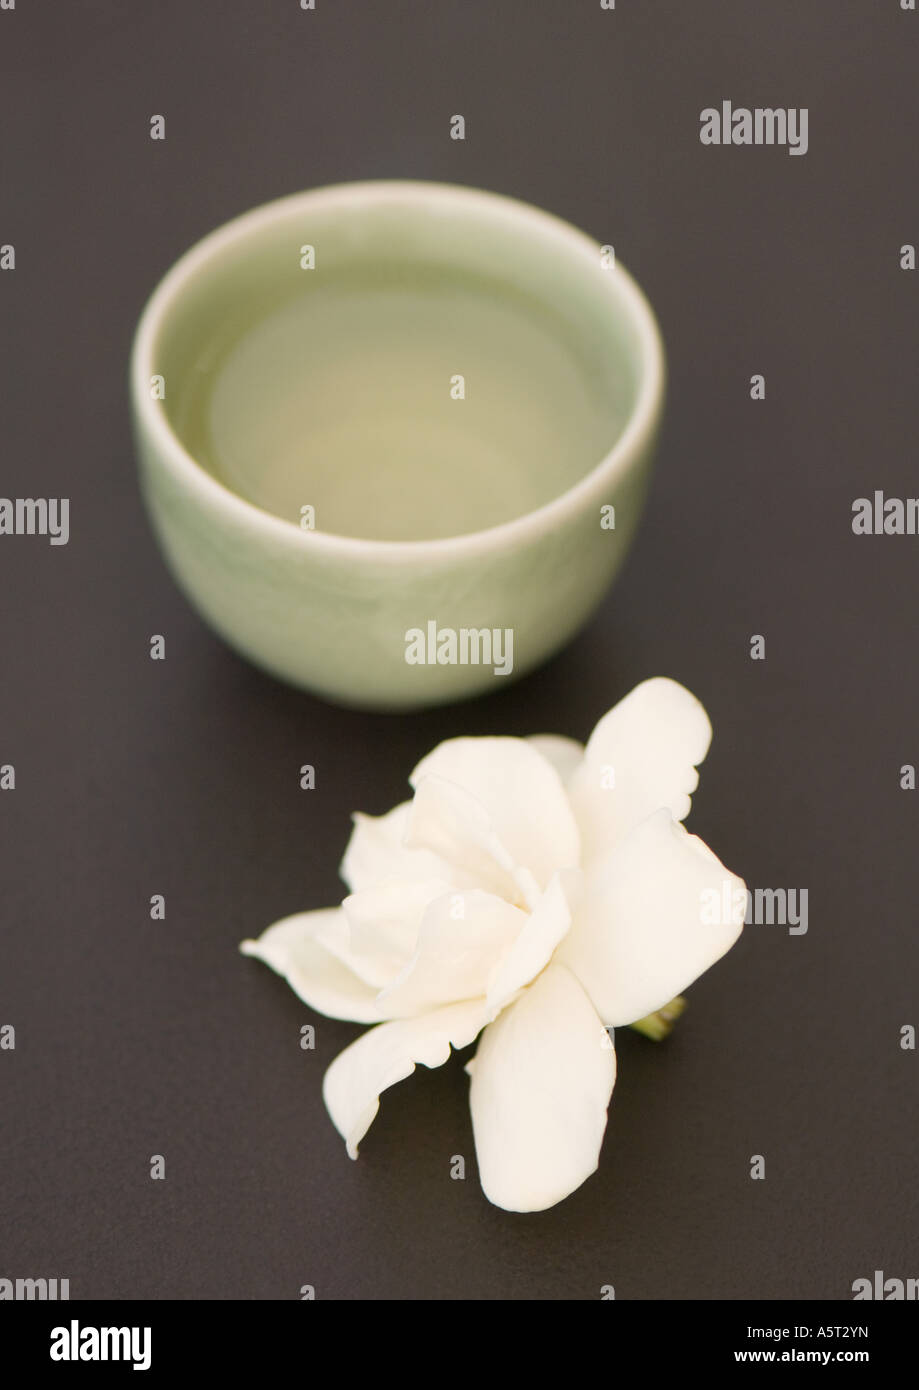 Bowl and gardenia flower Stock Photo